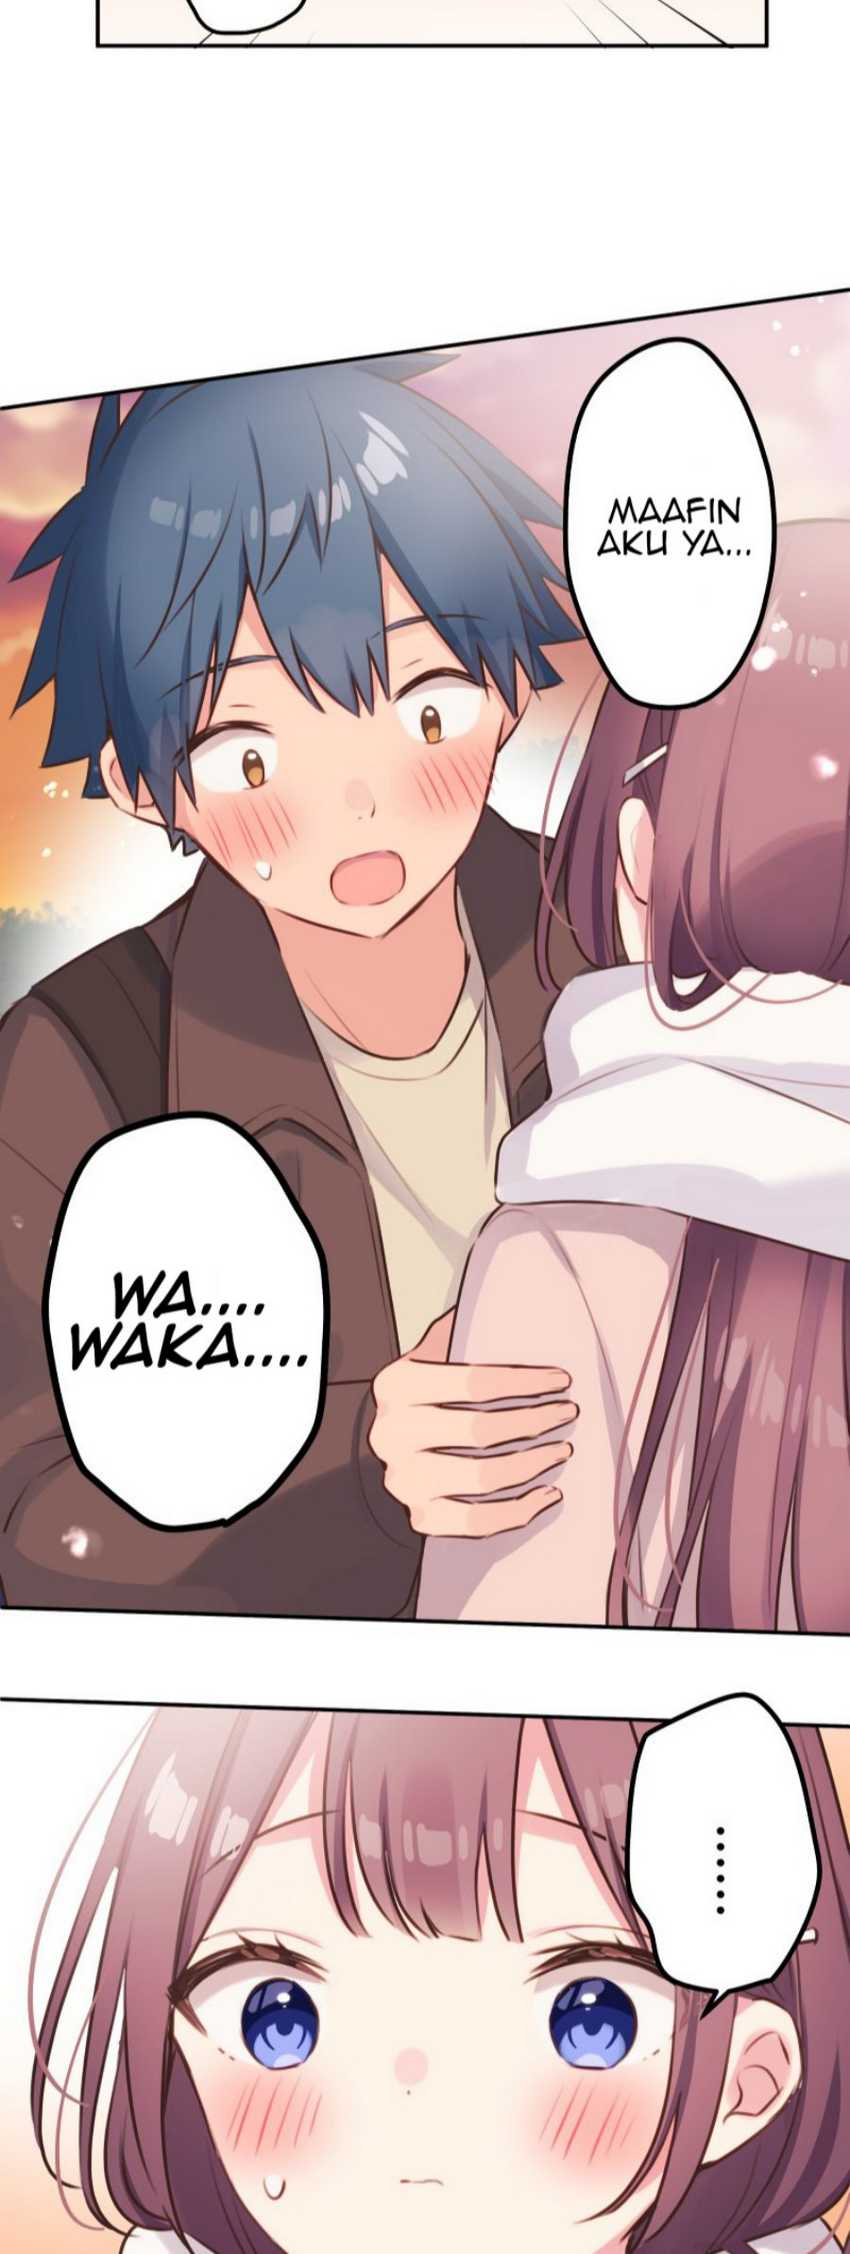 Waka-chan Is Flirty Again Chapter 109